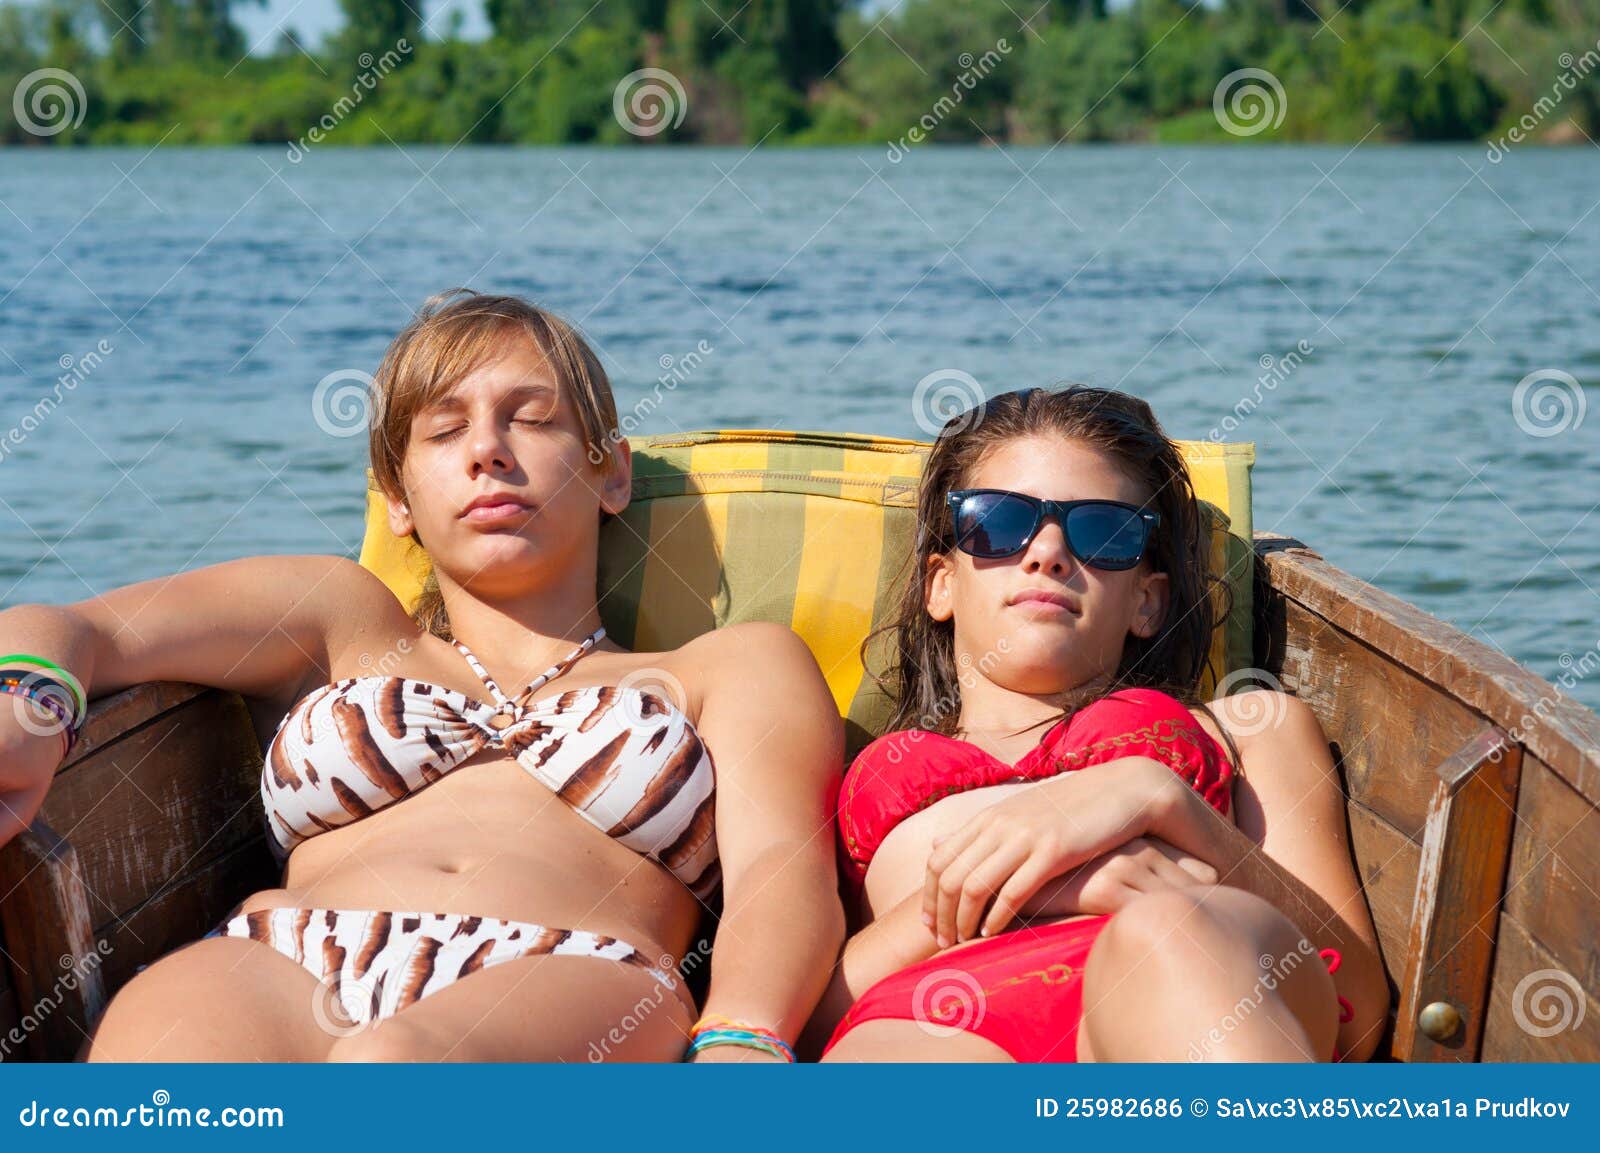 bob phelps recommends Girls Sunbathing Pics